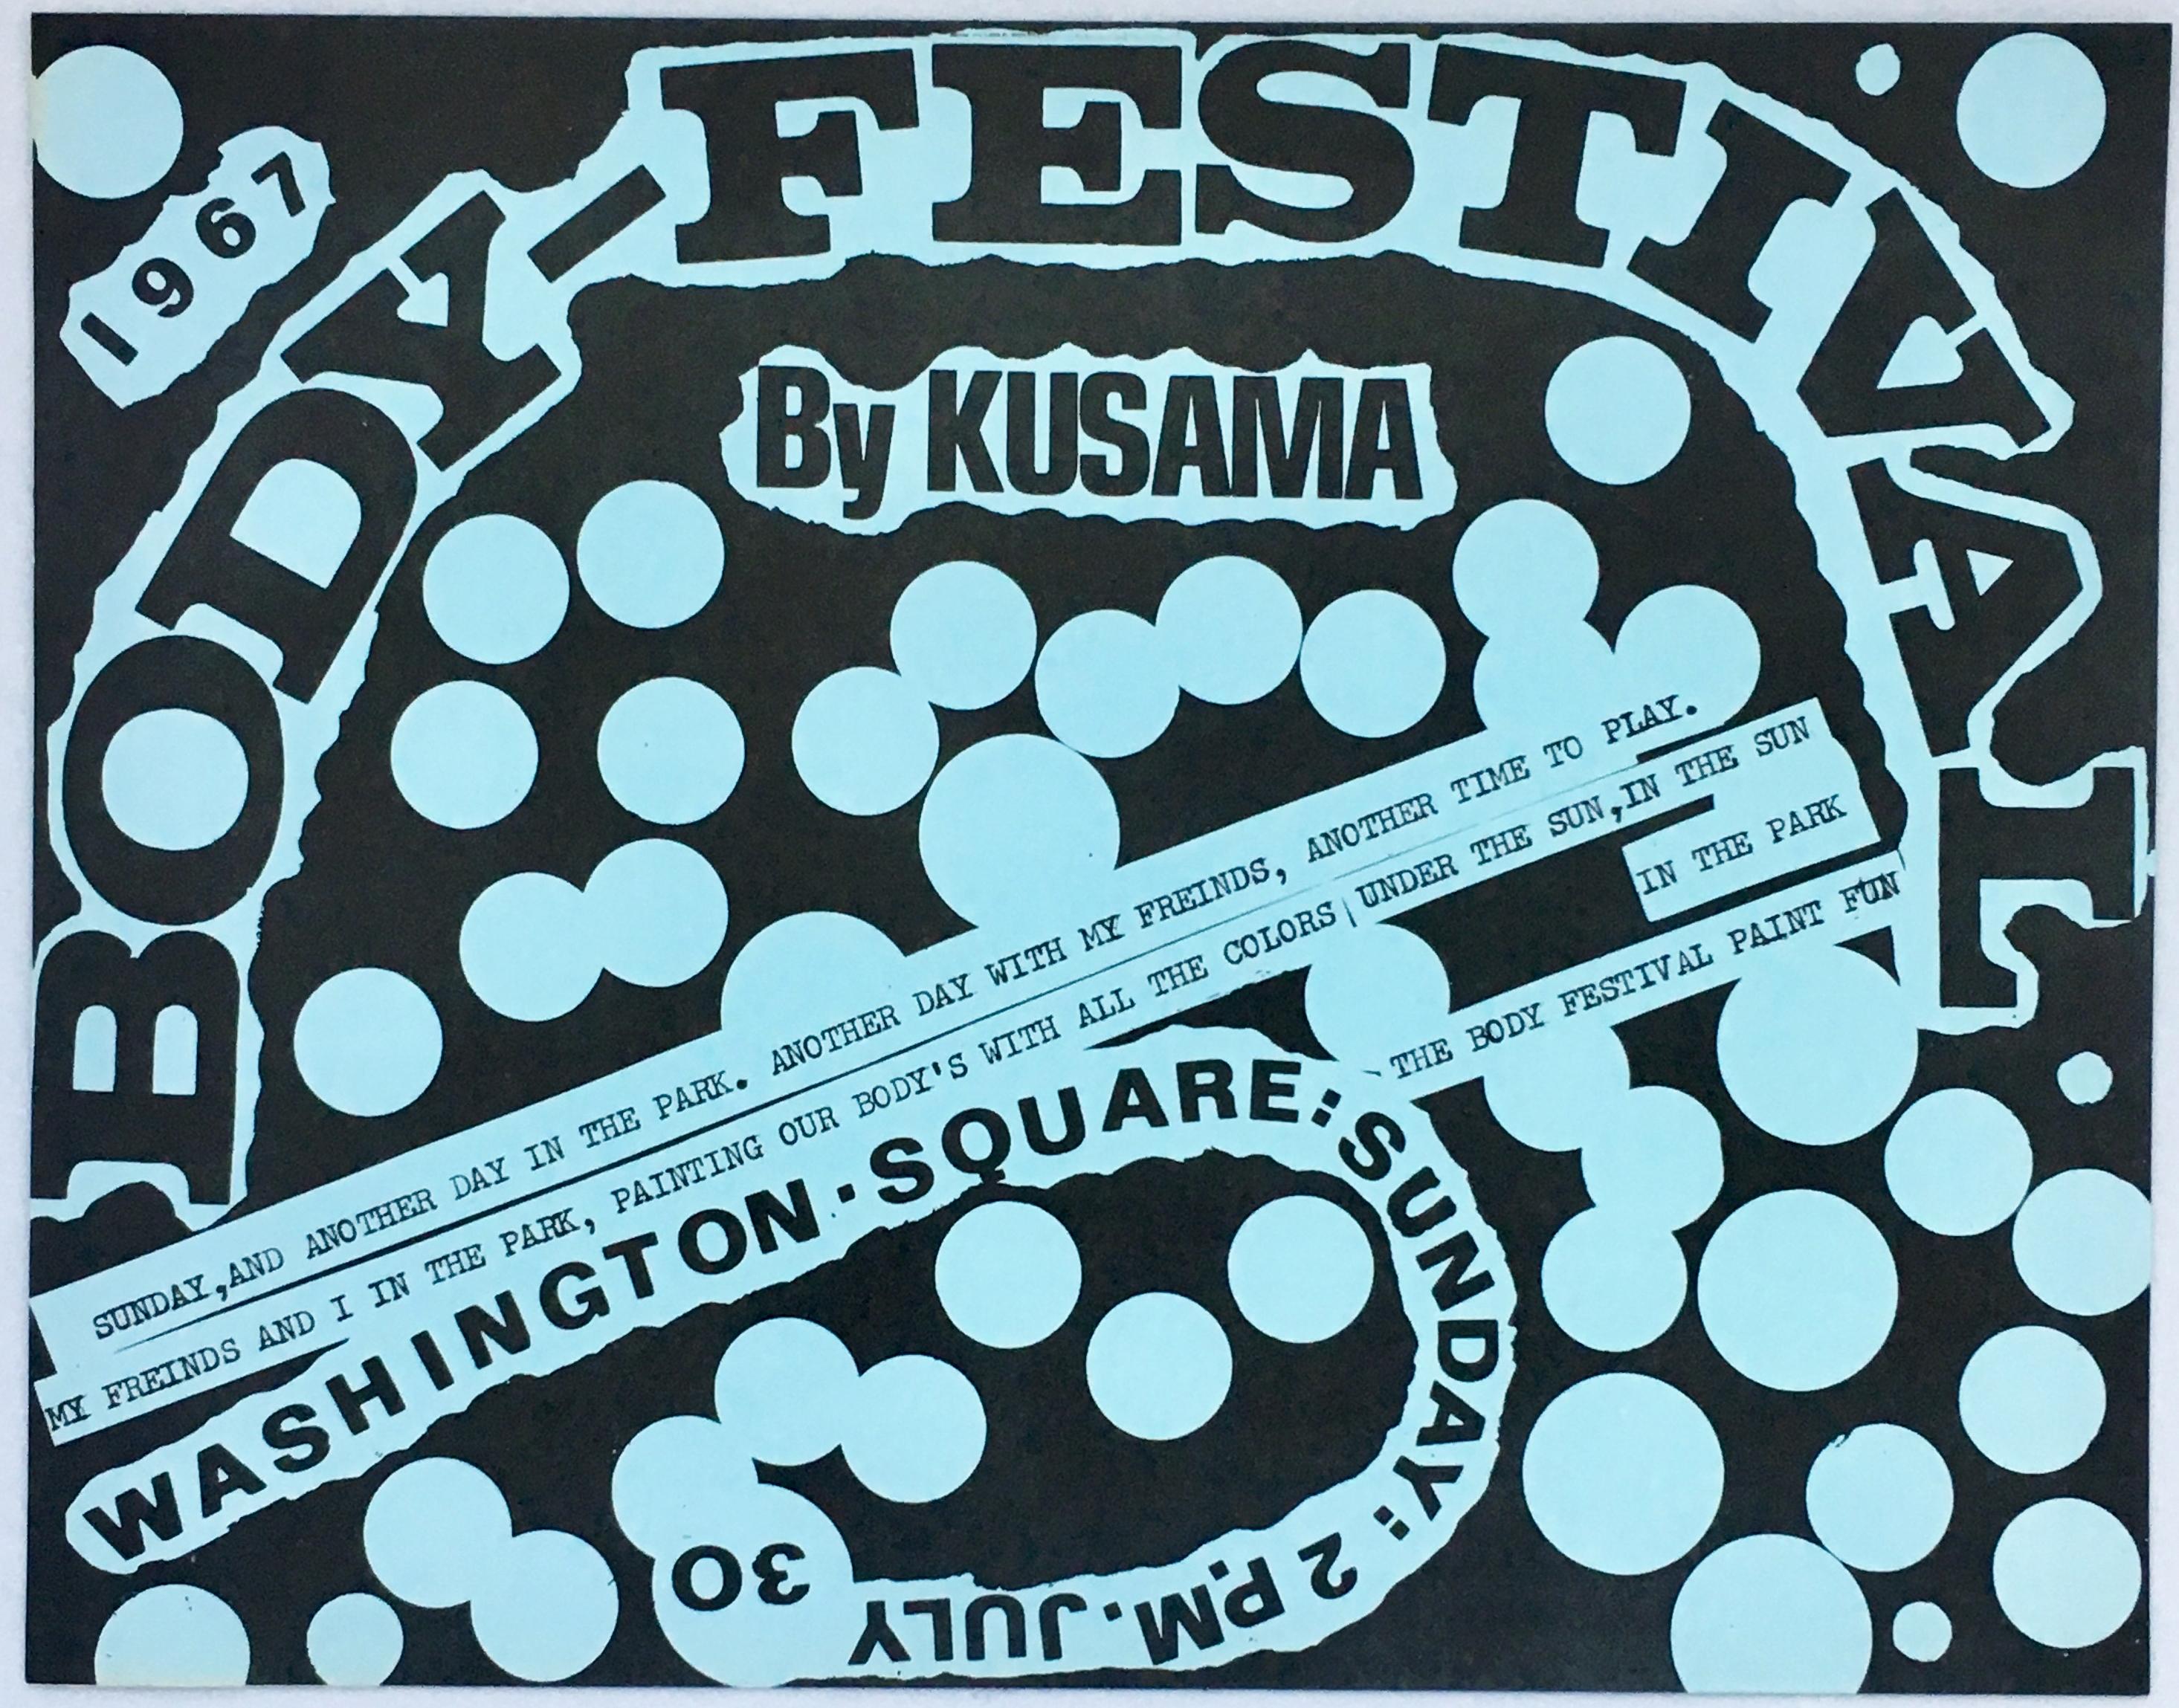 Body-Festival by Kusama, Washington Square Park (announcement) - Pop Art Print by Yayoi Kusama